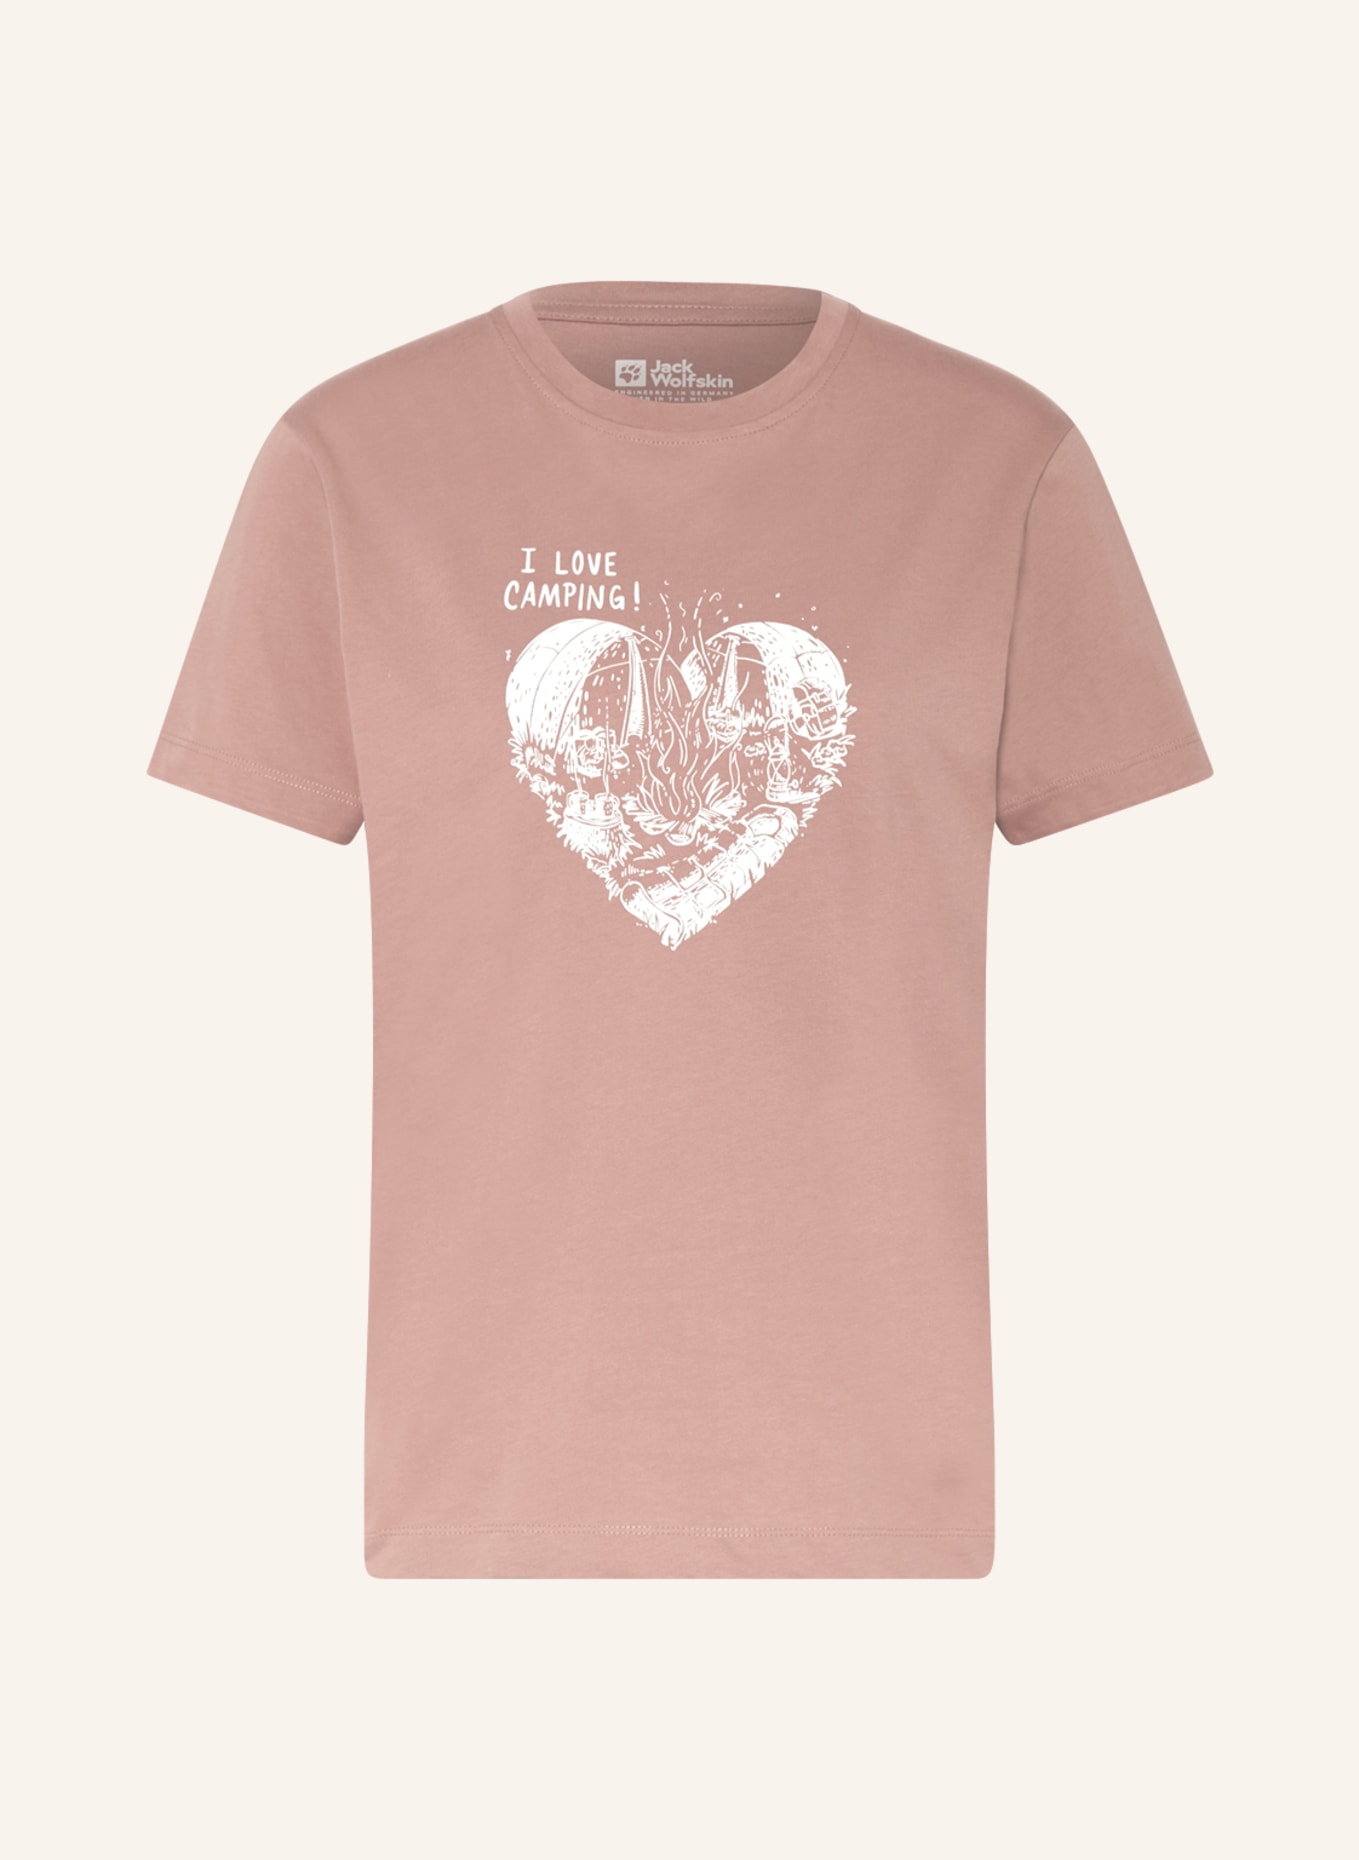 Jack Wolfskin T-Shirt CAMPING LOVE, Farbe: ALTROSA/ WEISS (Bild 1)